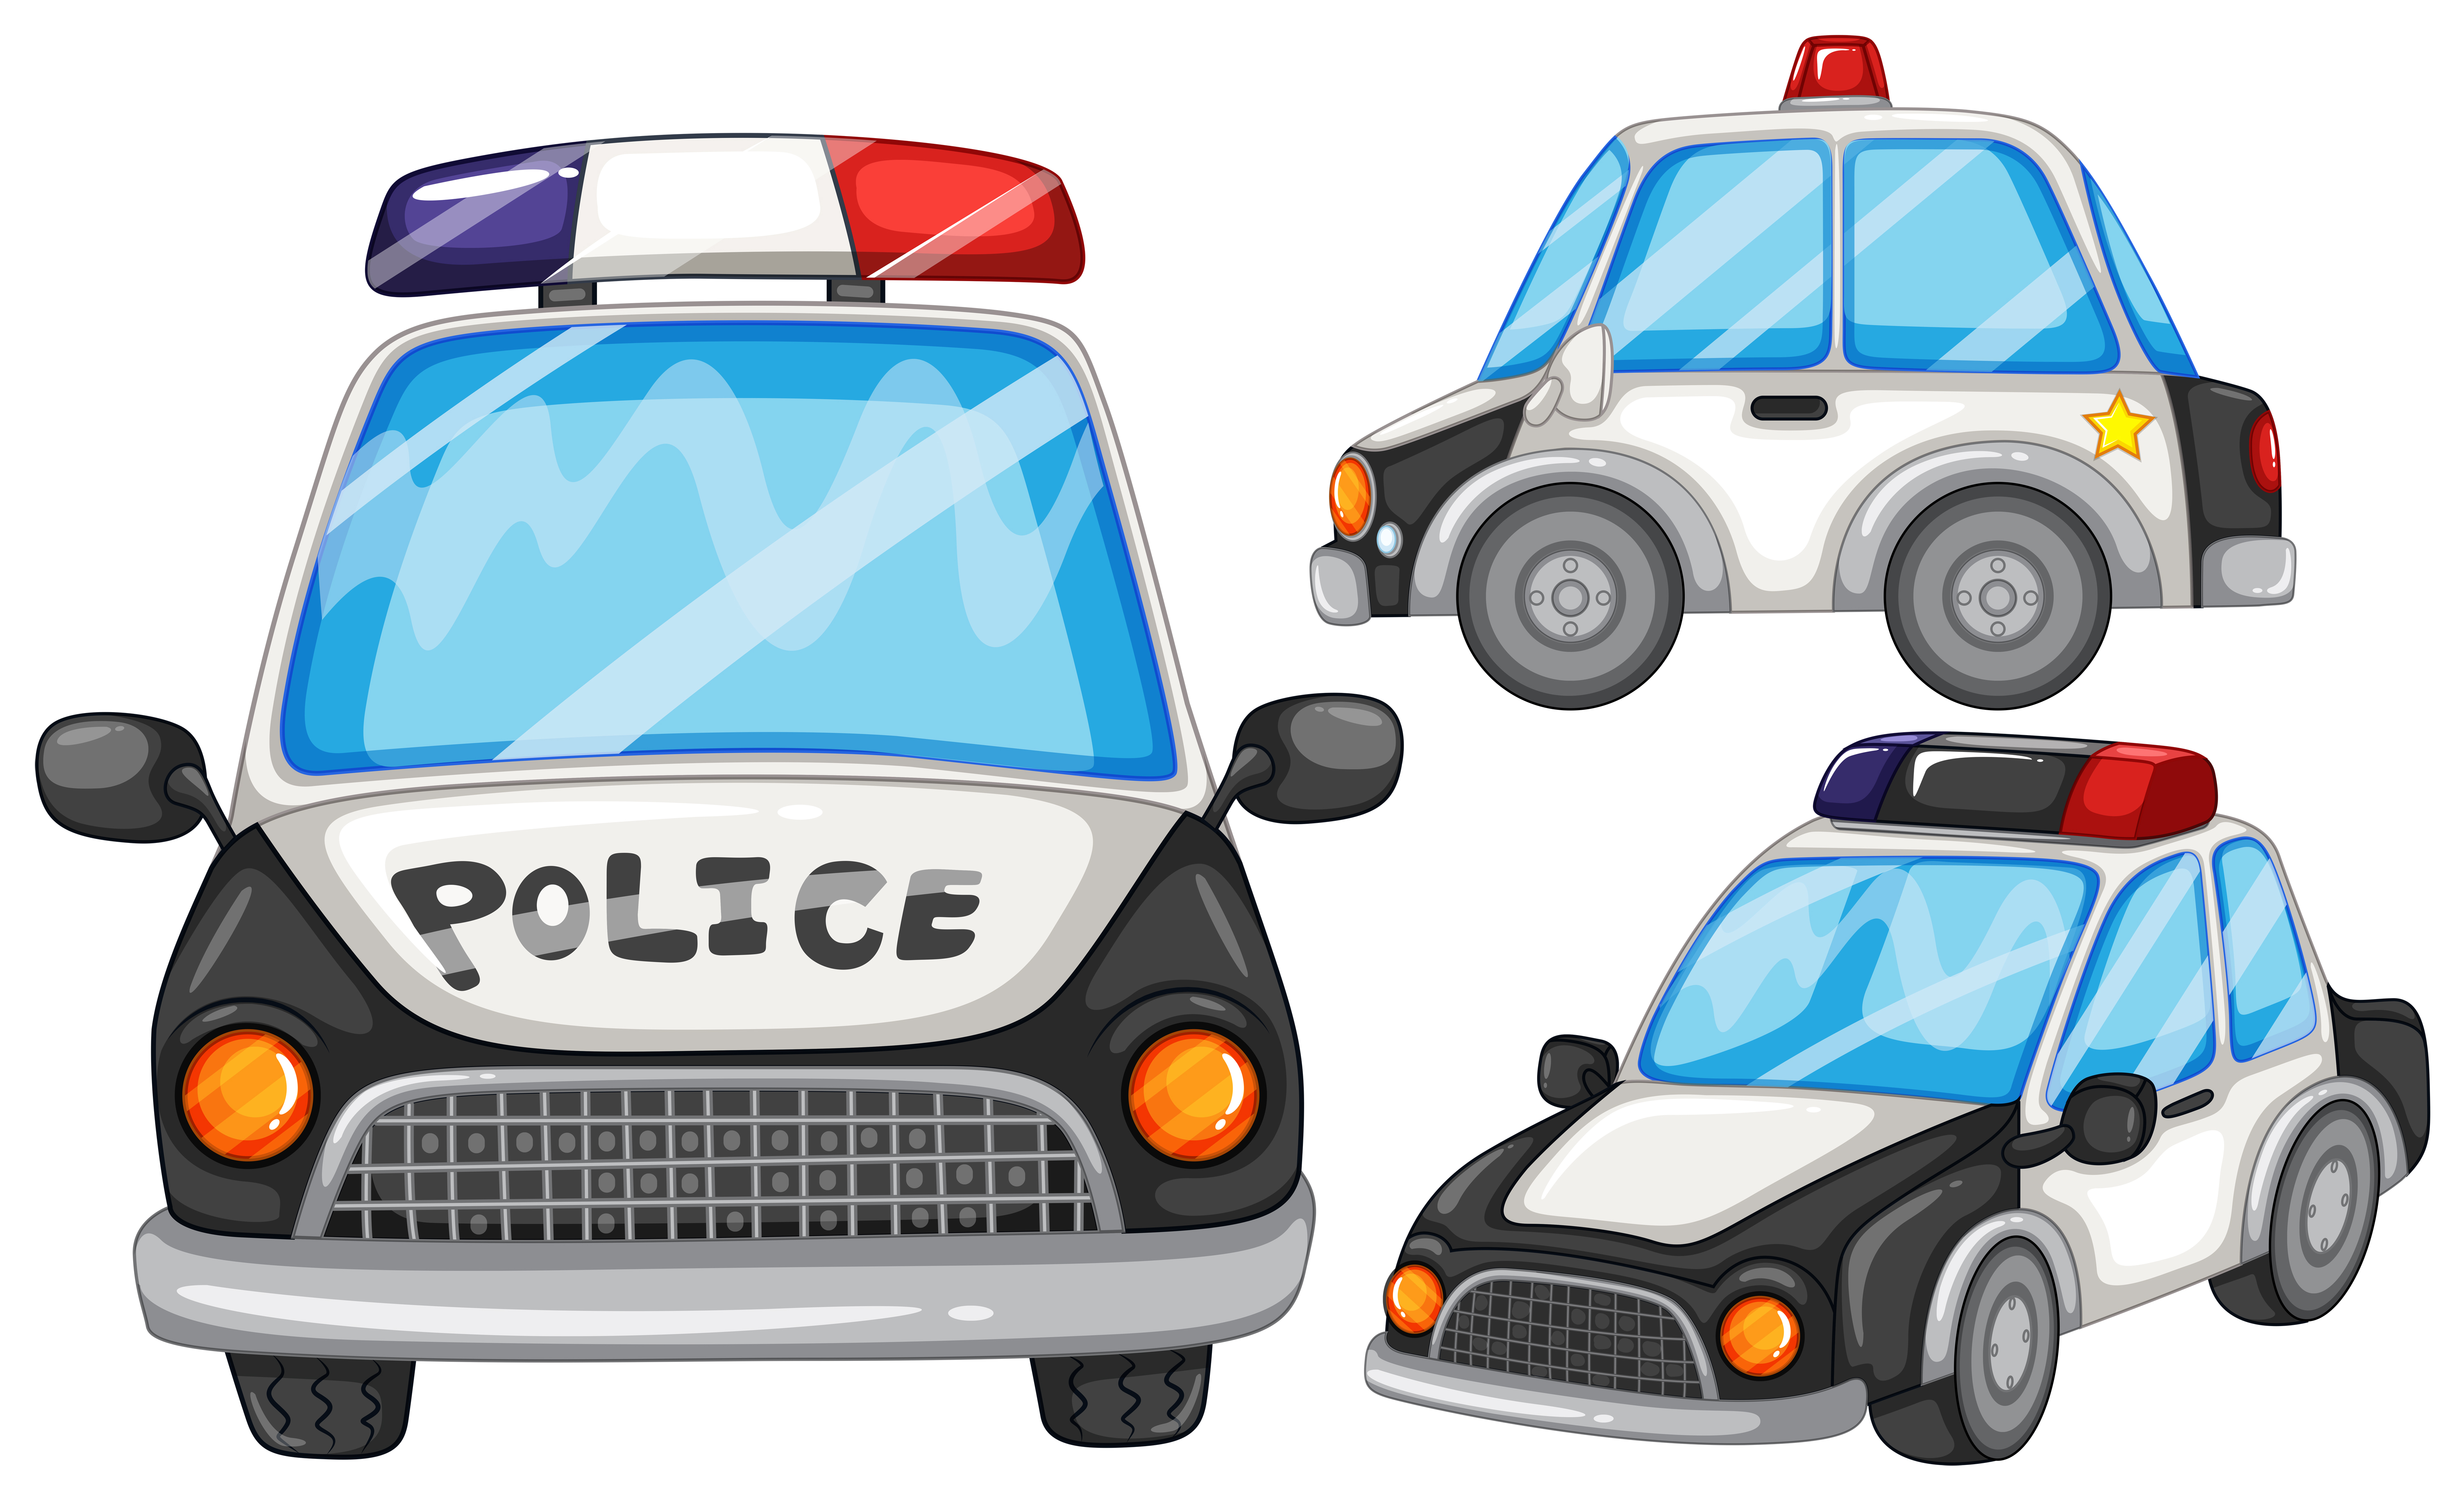 Download Police cars 360603 - Download Free Vectors, Clipart Graphics & Vector Art